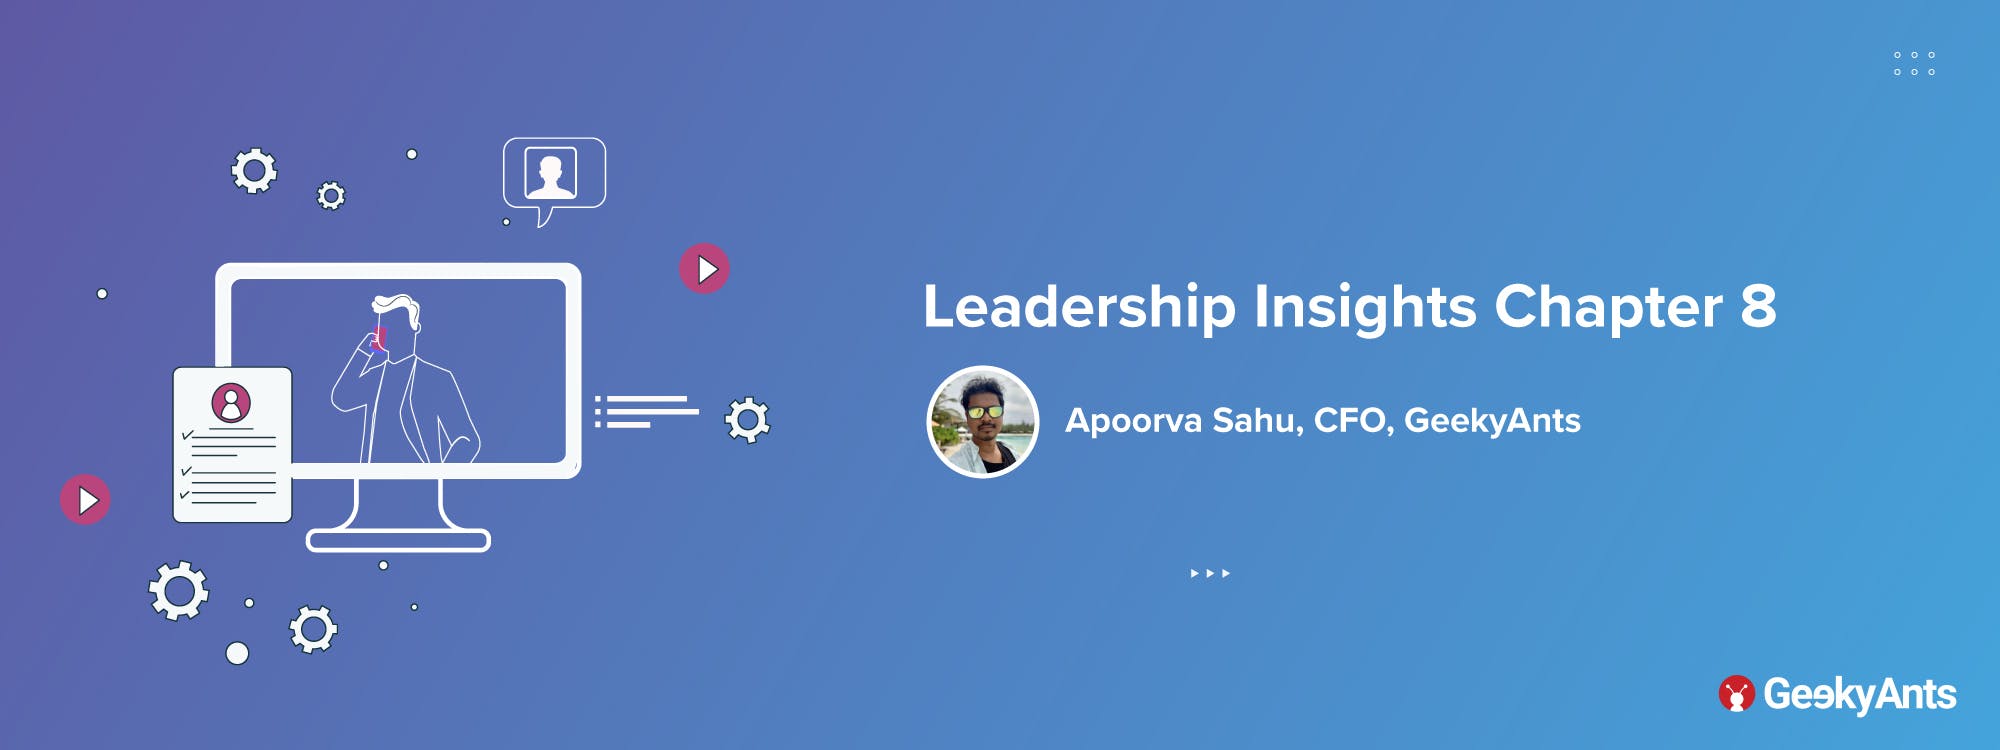 Leadership Insights Chapter 8: Apoorva Sahu, CFO, GeekyAnts